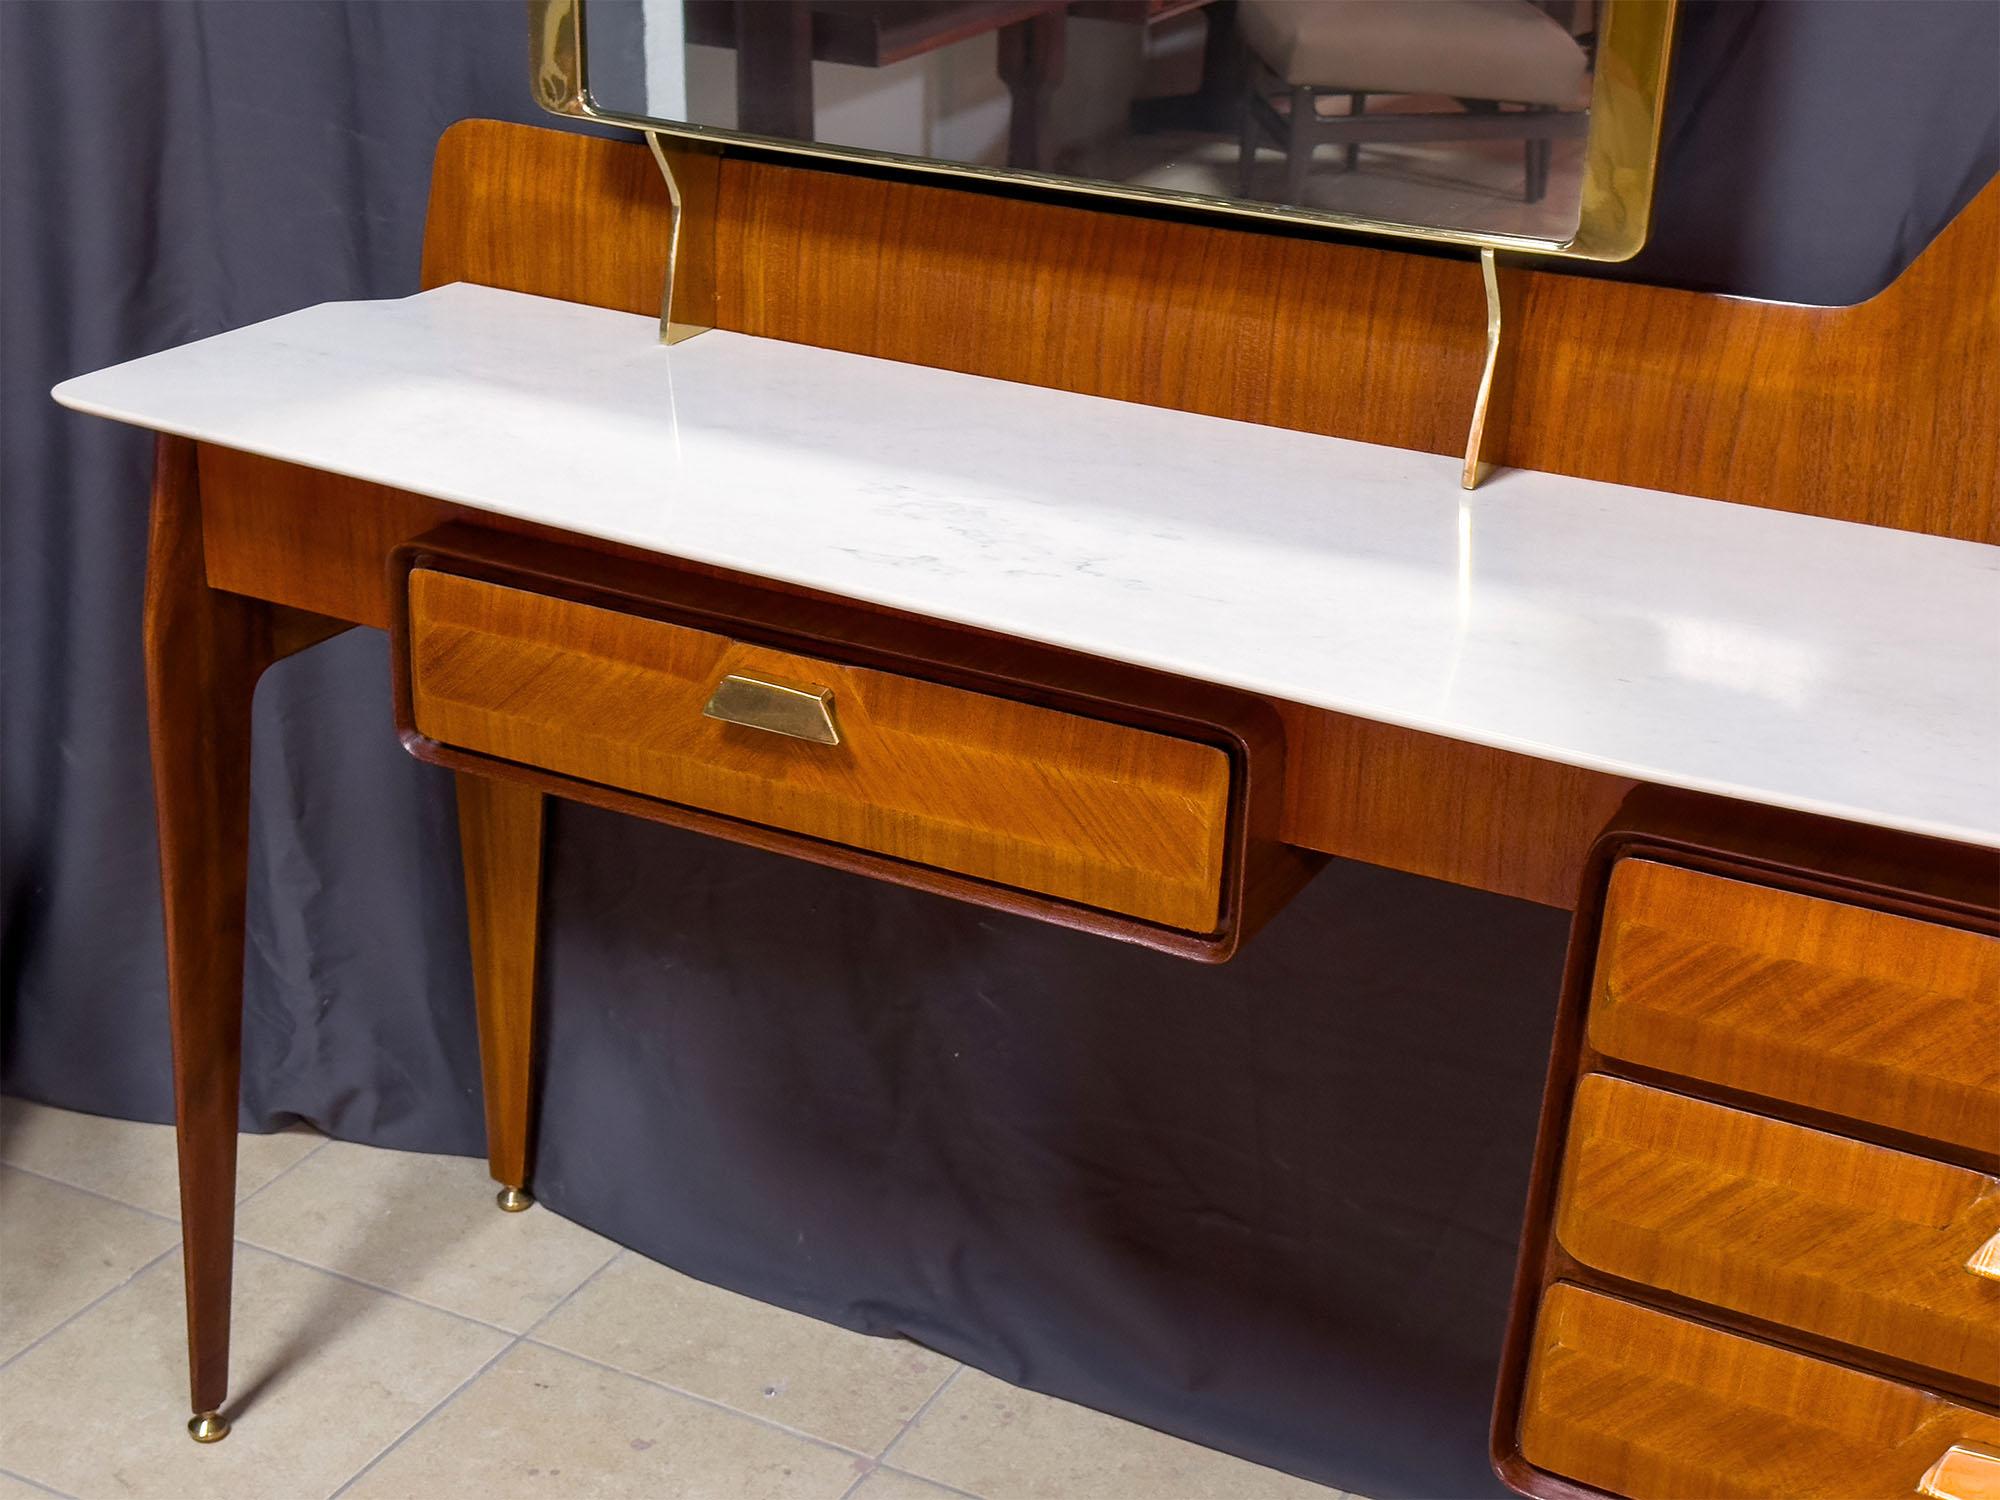 Italian Mid-Century Teakwood Sideboard or Dresser by La Permanente Mobili Cantù, 1950s For Sale